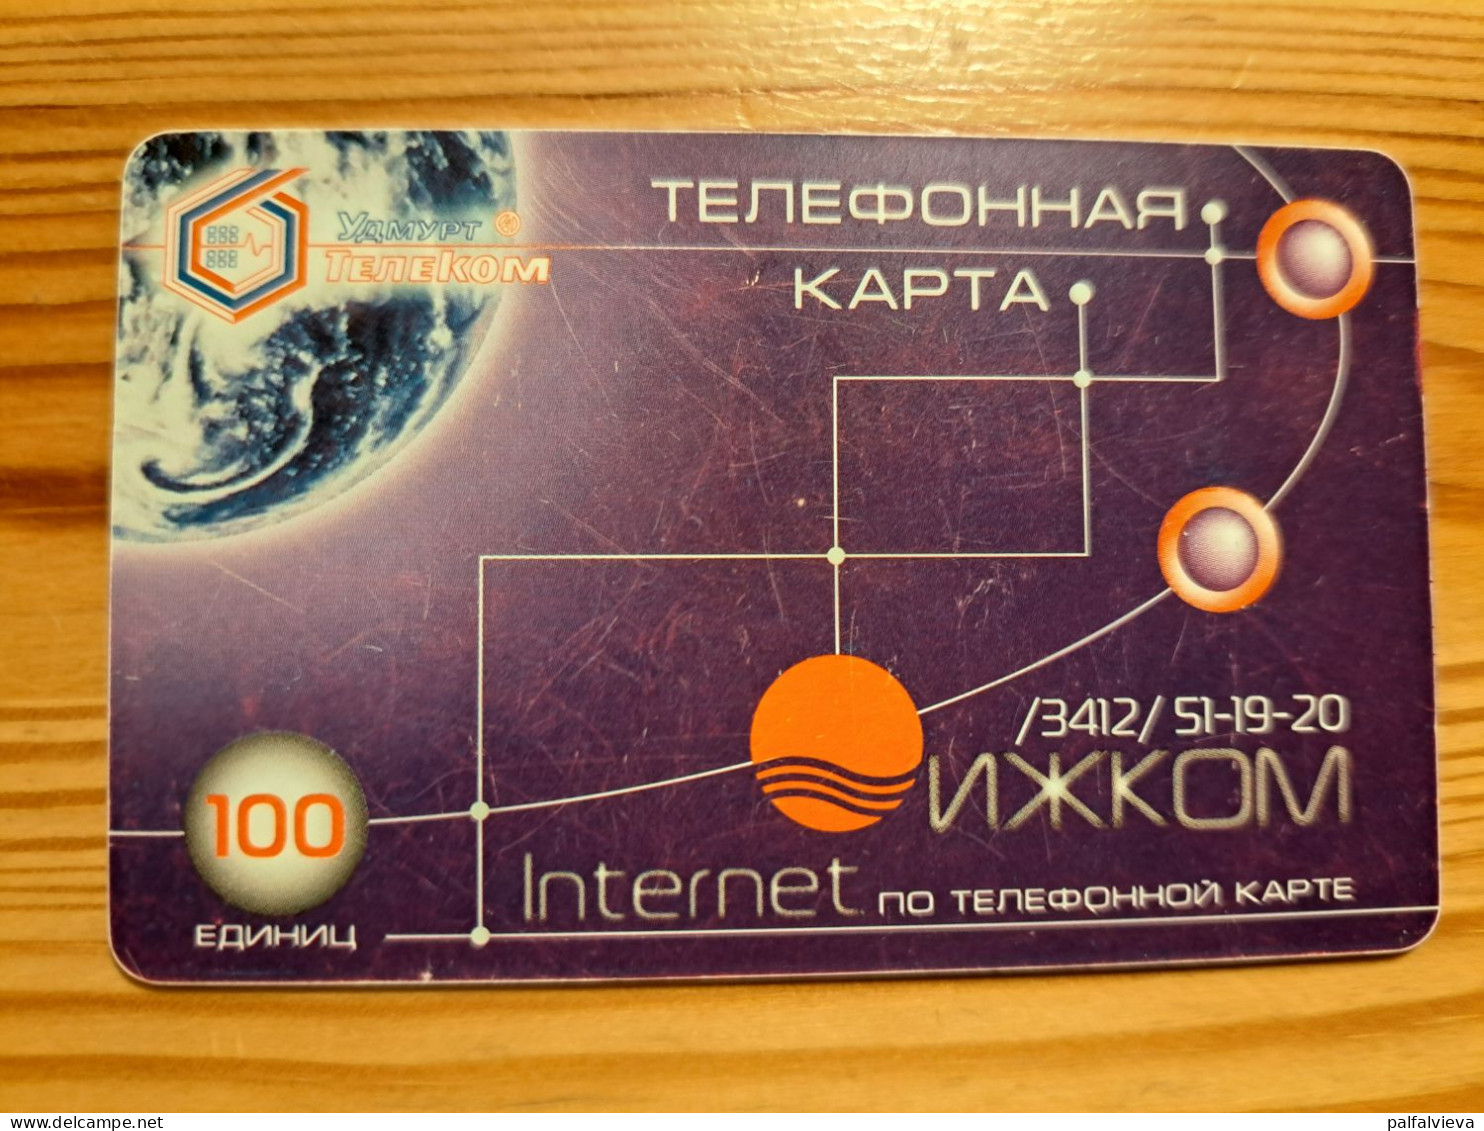 Prepaid Phonecard Russia, Udmurt Telecom - Izhevsk - Russia